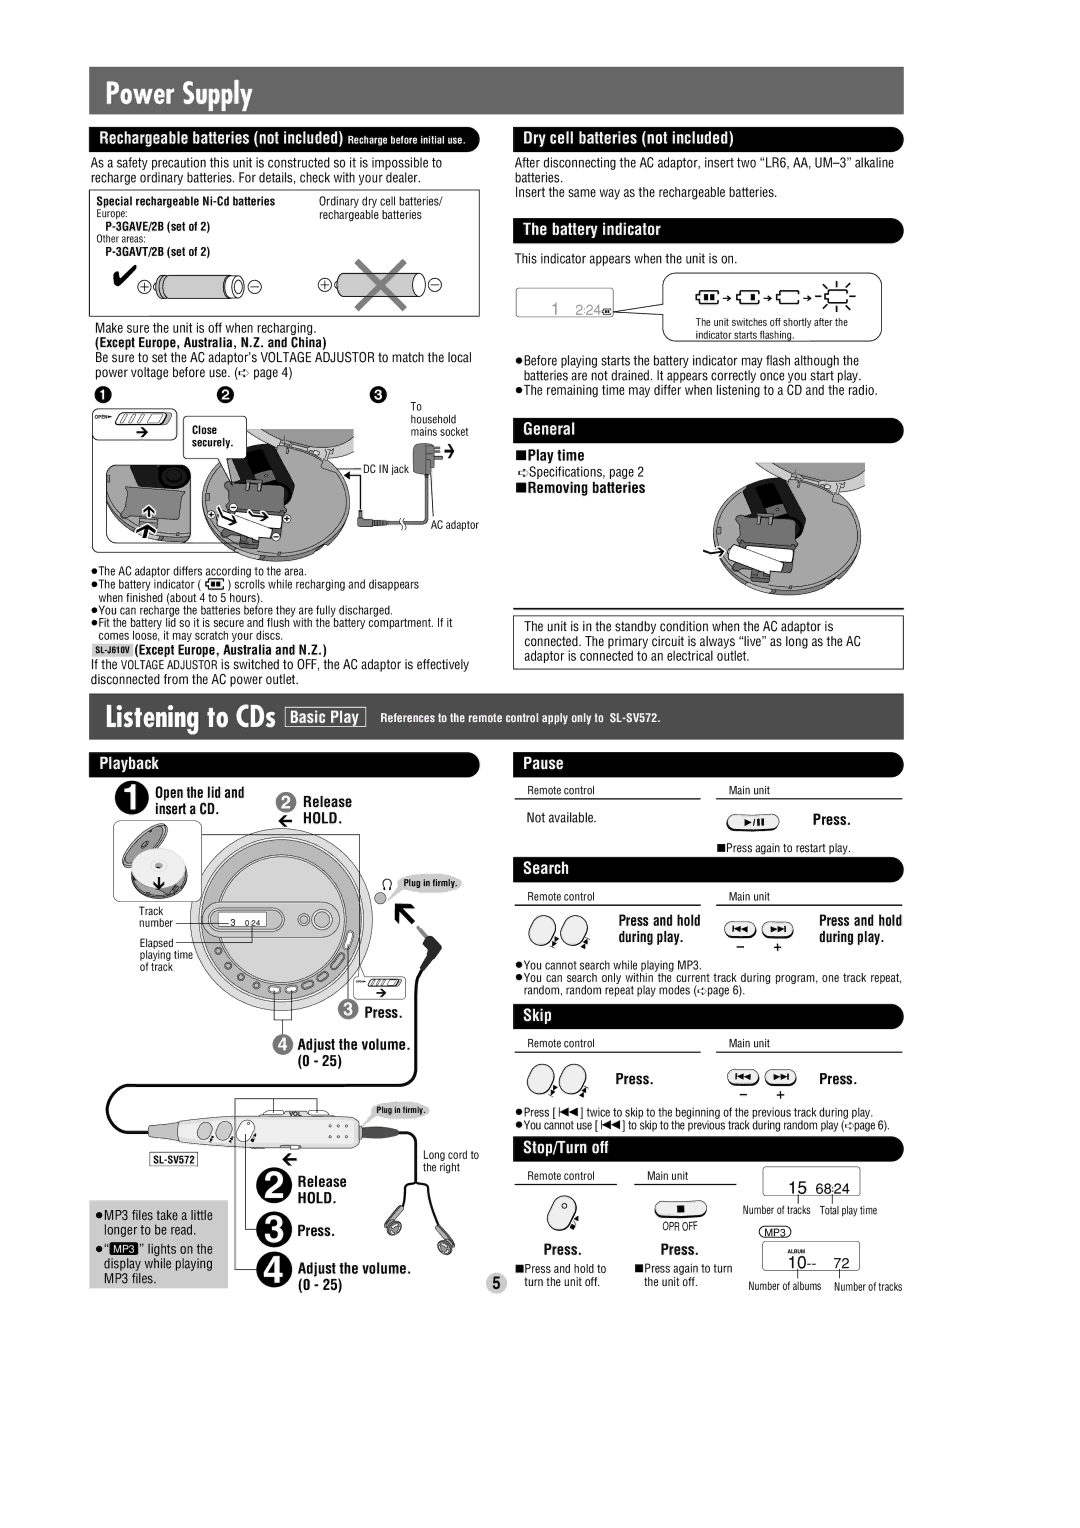 Panasonic SL-SV572 operating instructions Power Supply, Listening to CDs 